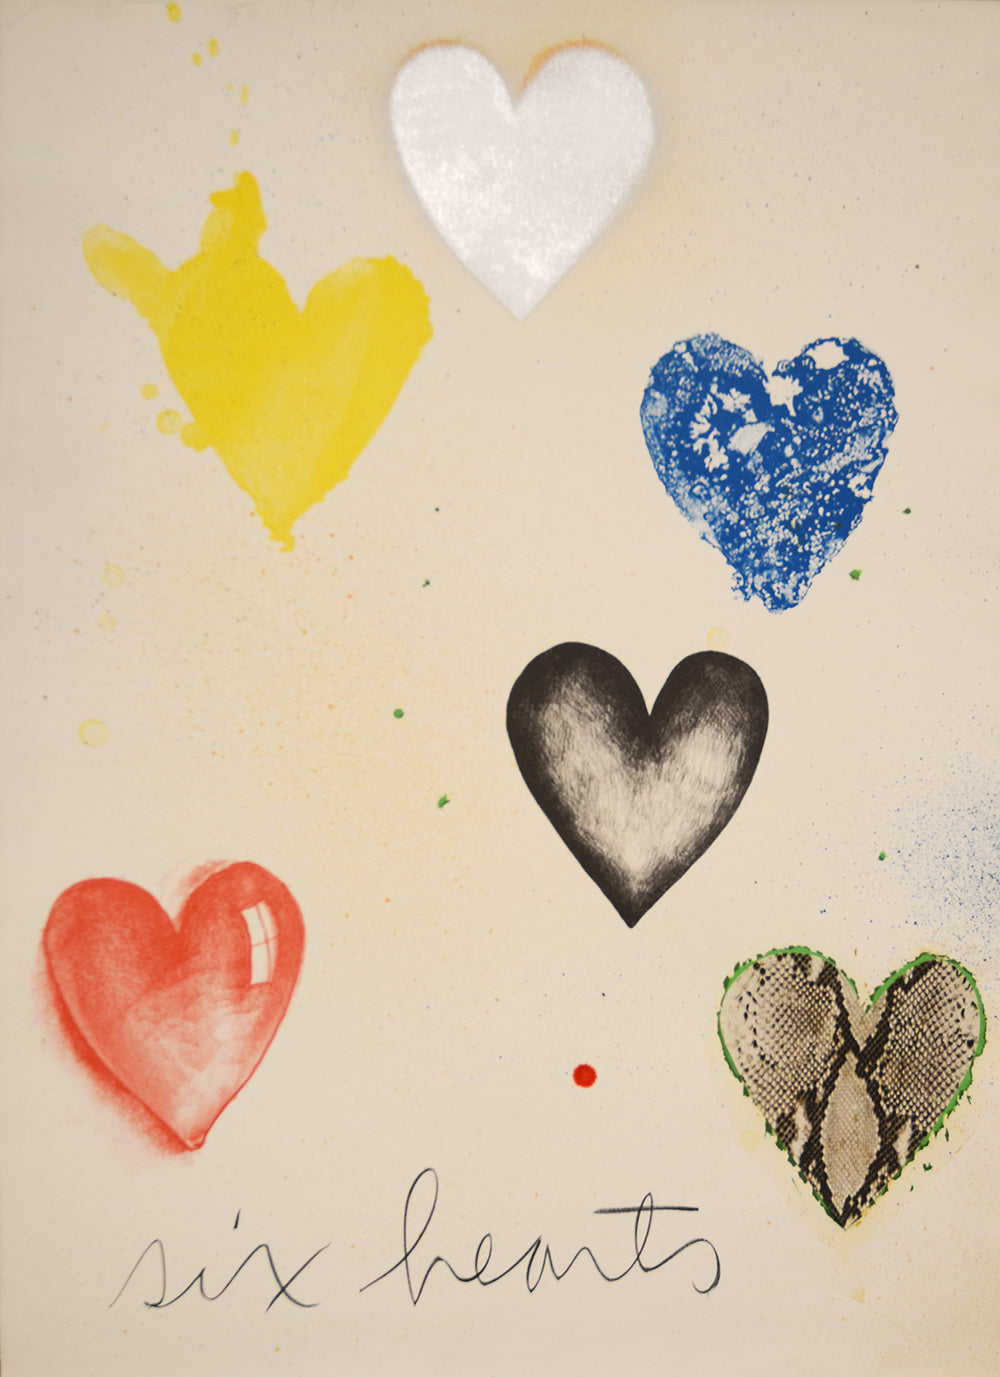 Jim Dine - Six Hearts - Gallery Ten - Original Print - Modern Art